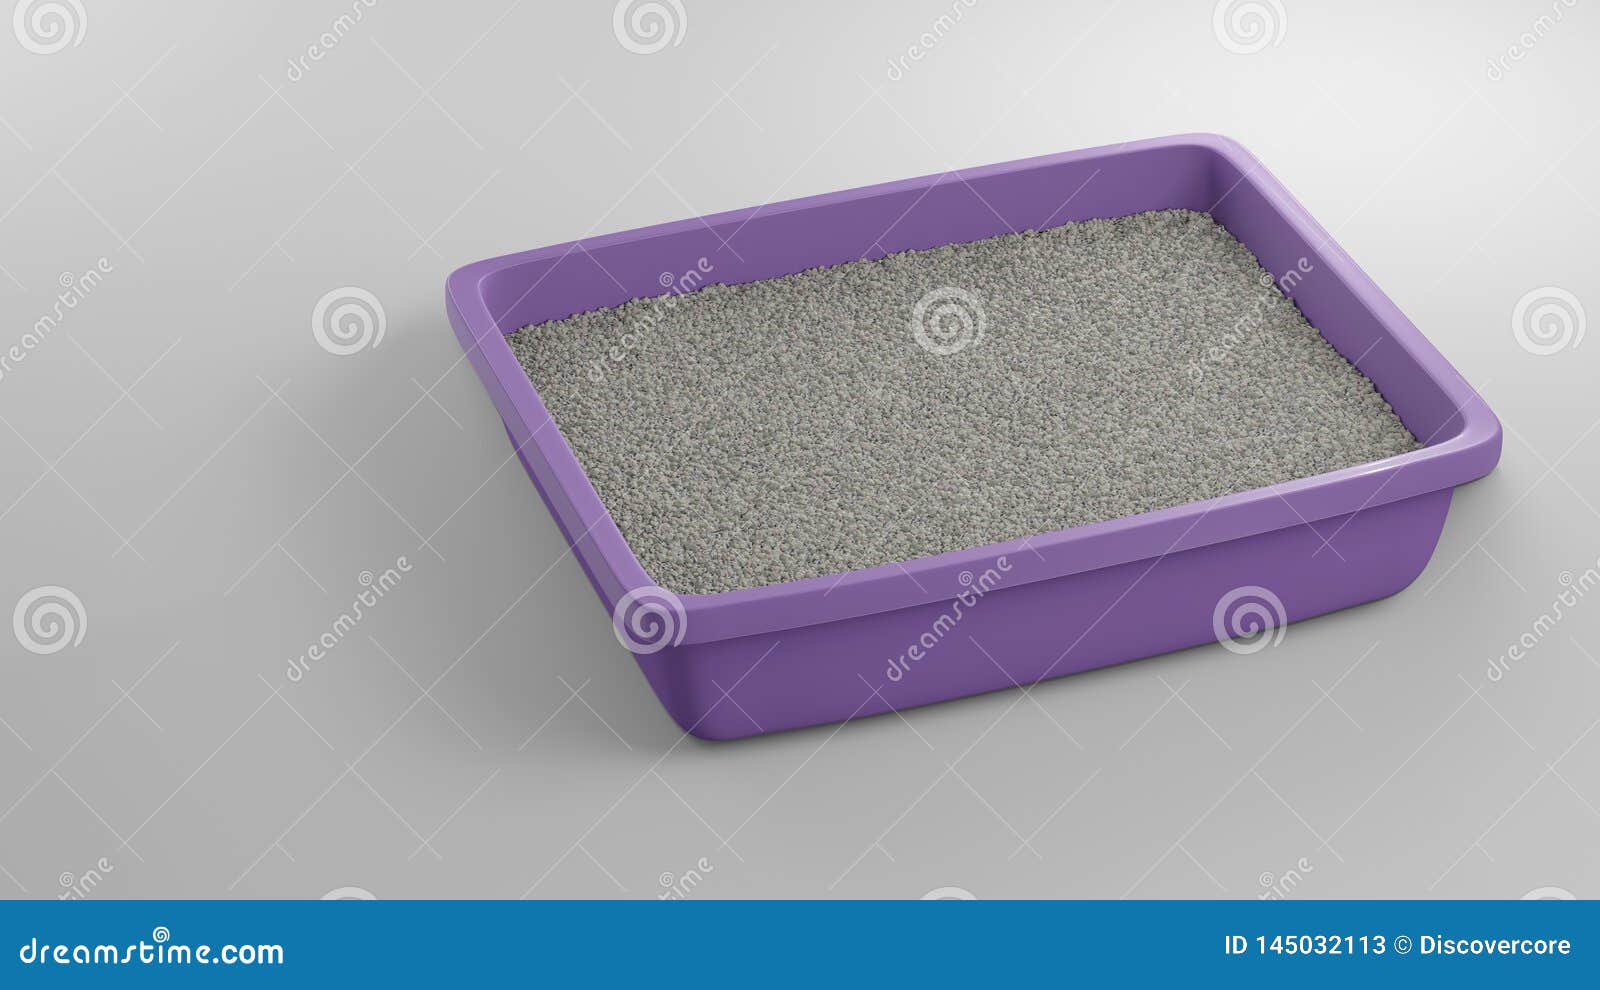 Rectangular cat litter tray with shovel